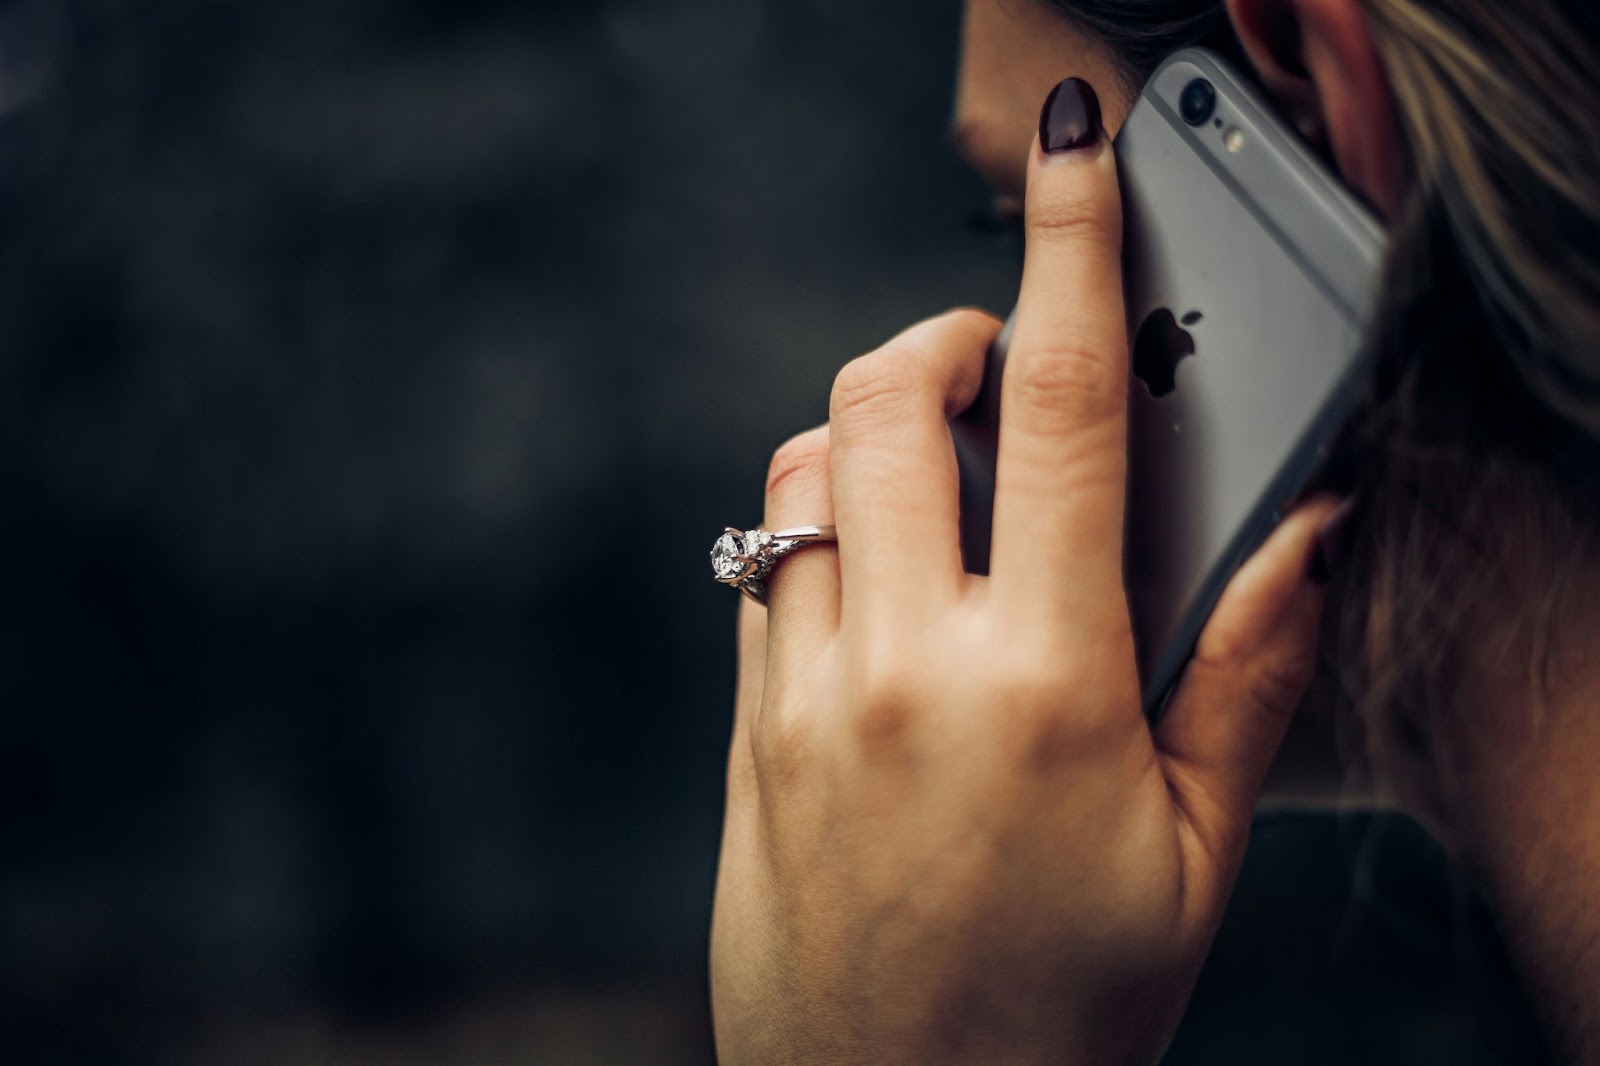 A woman taking a phone call